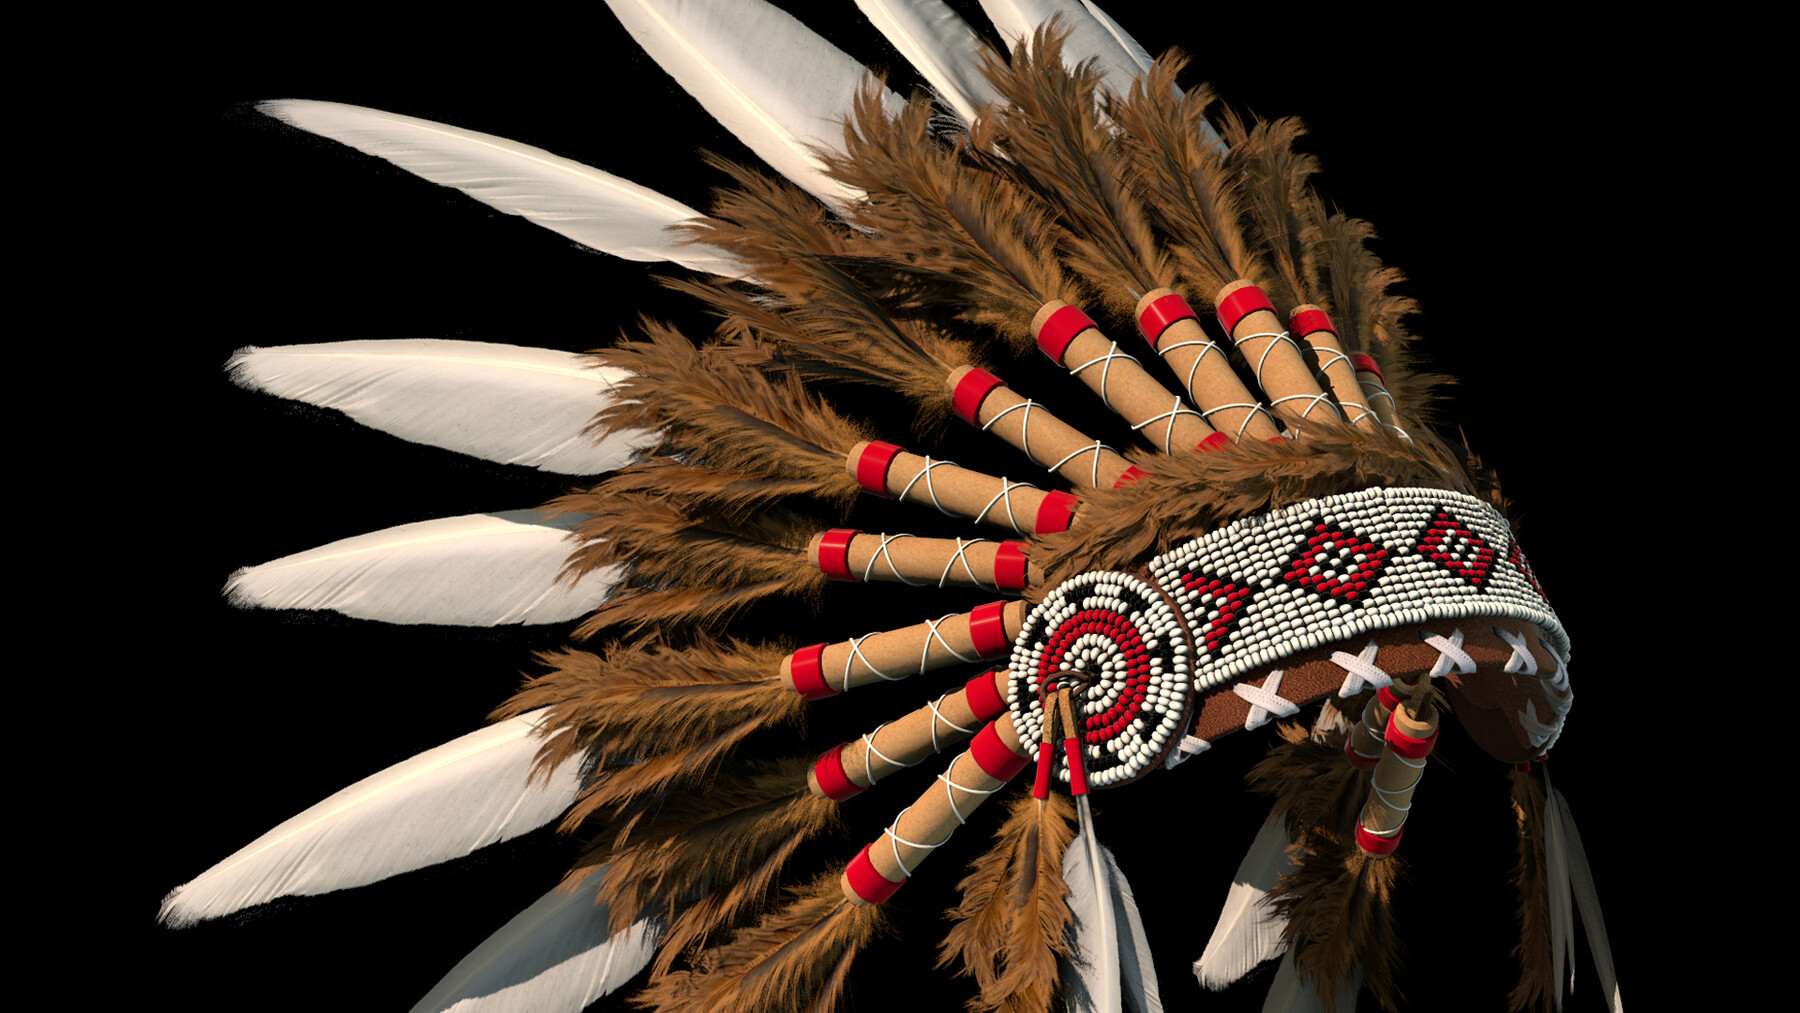 ArtStation - Native American Headdress | Indian Comanche Tribal Bonnet ...